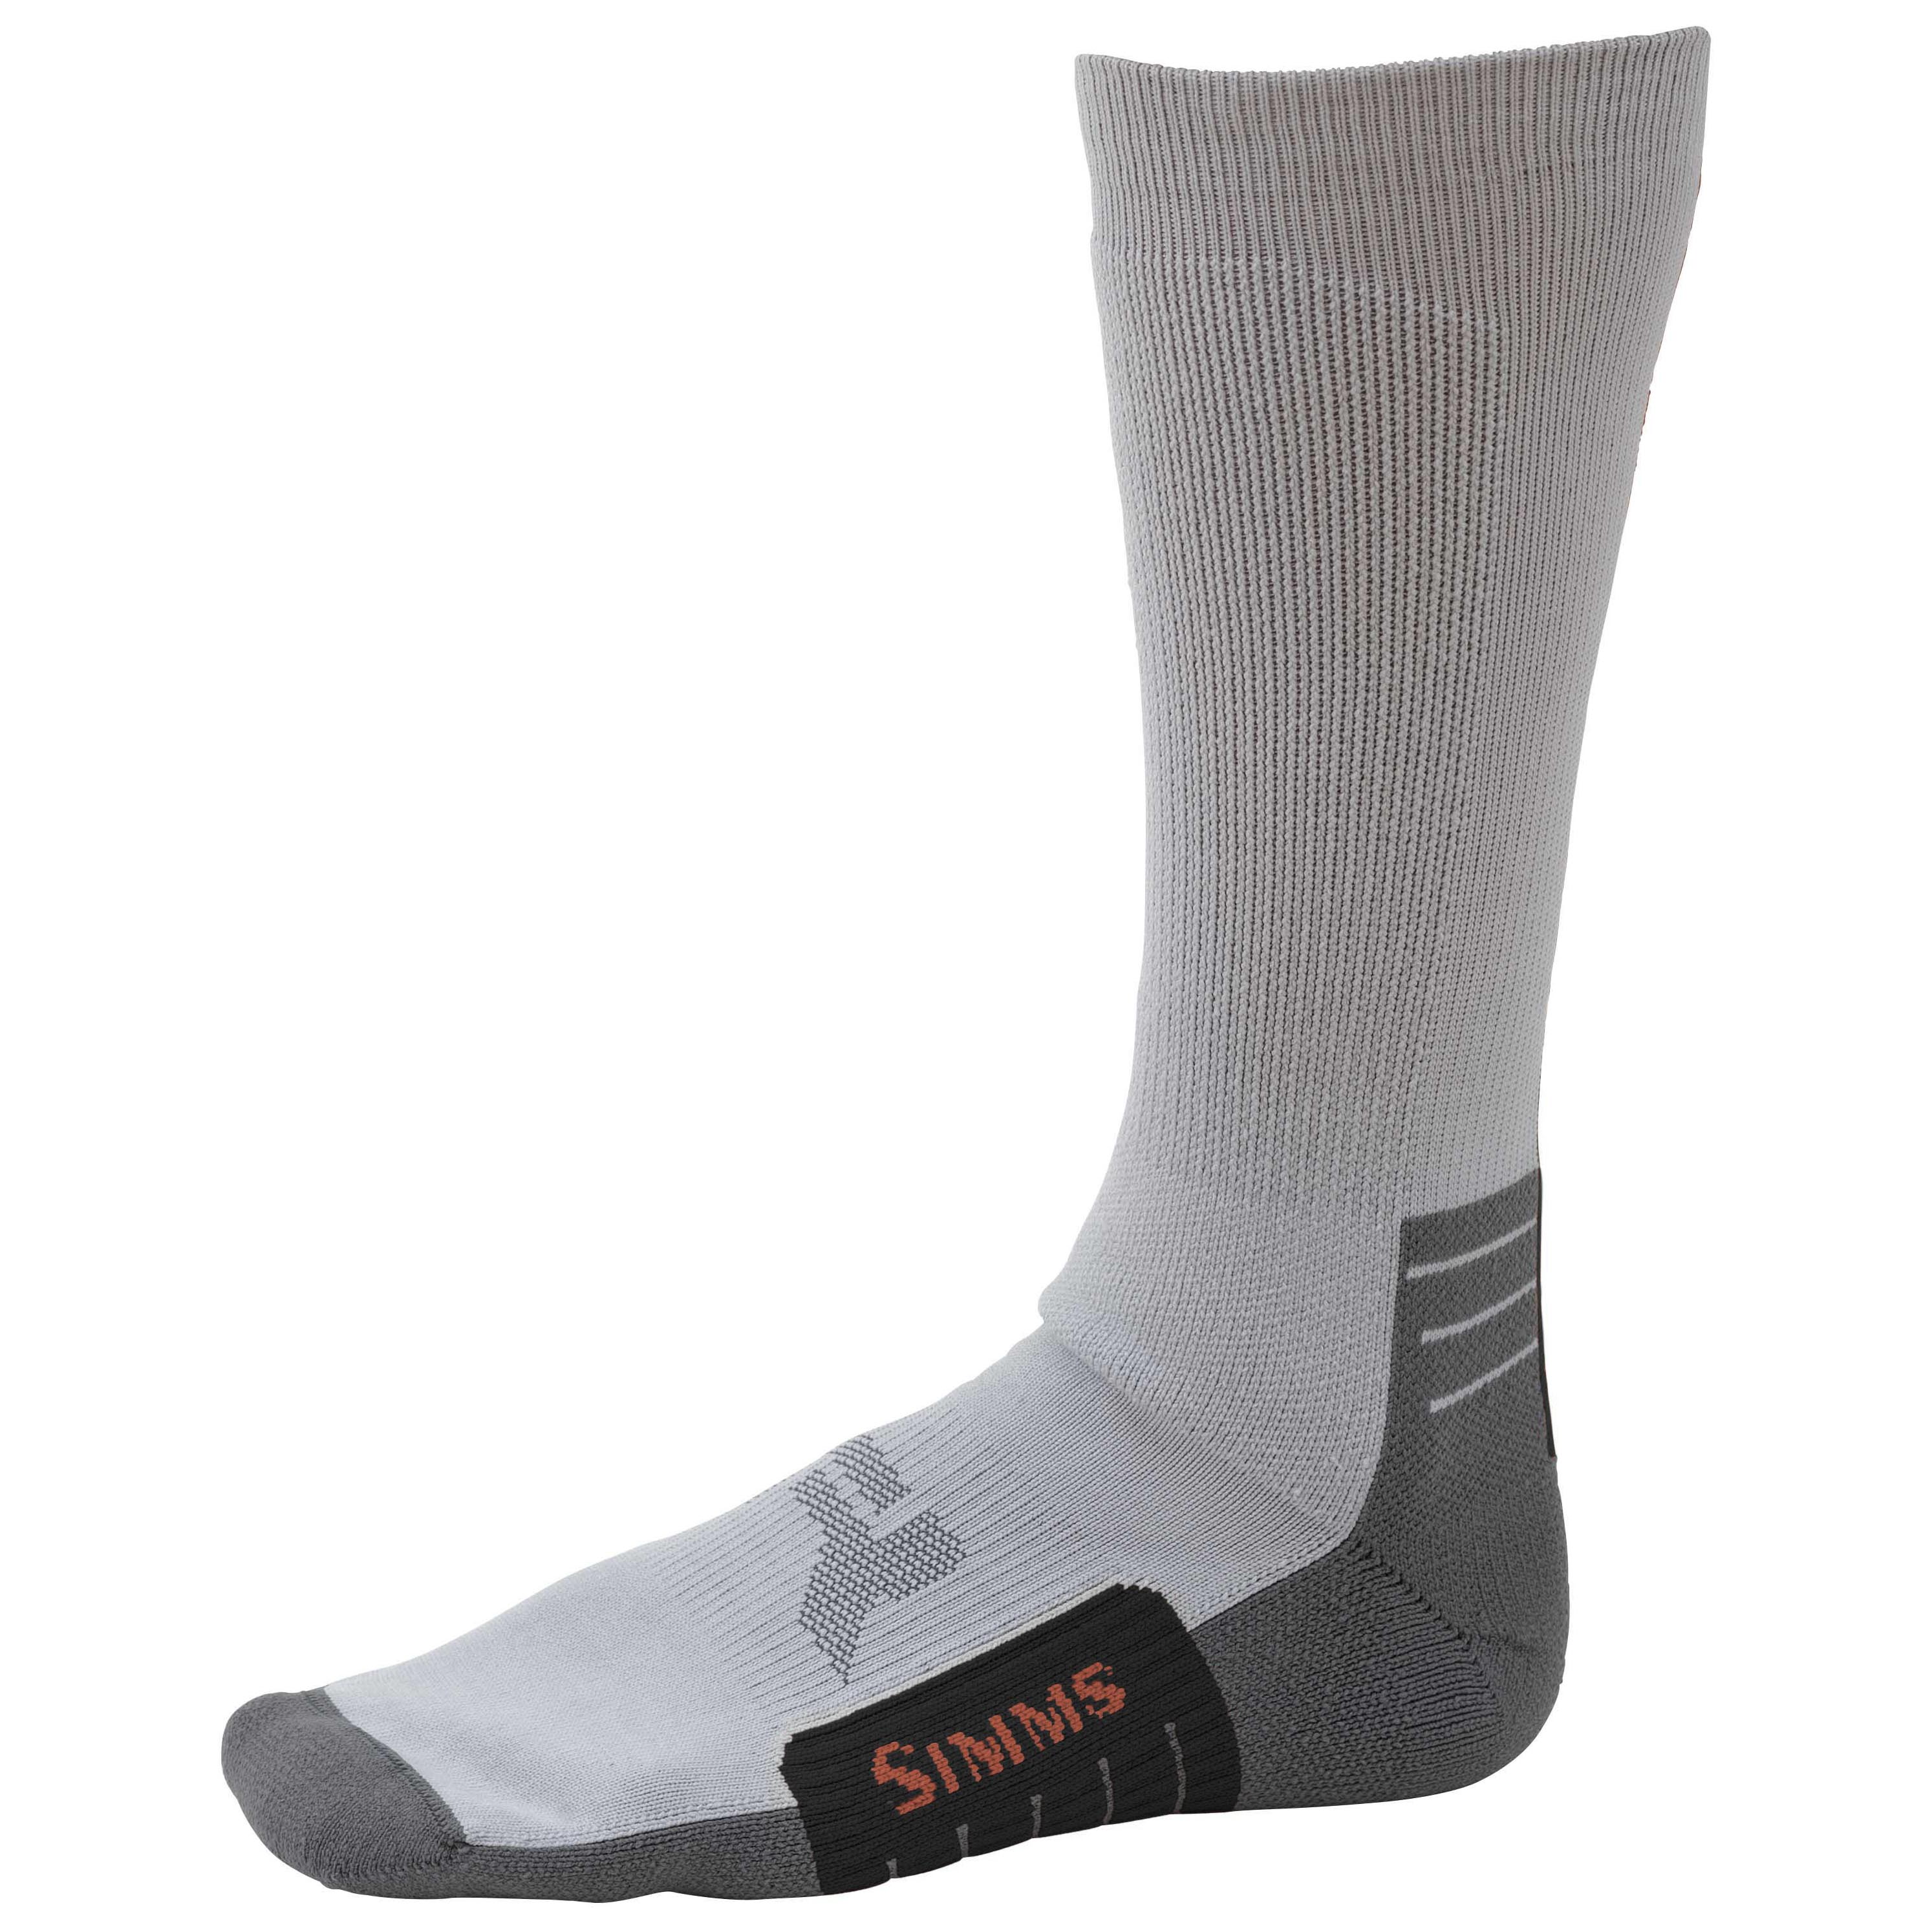 Simms Flyweight Neoprene Wet-Wading Socks